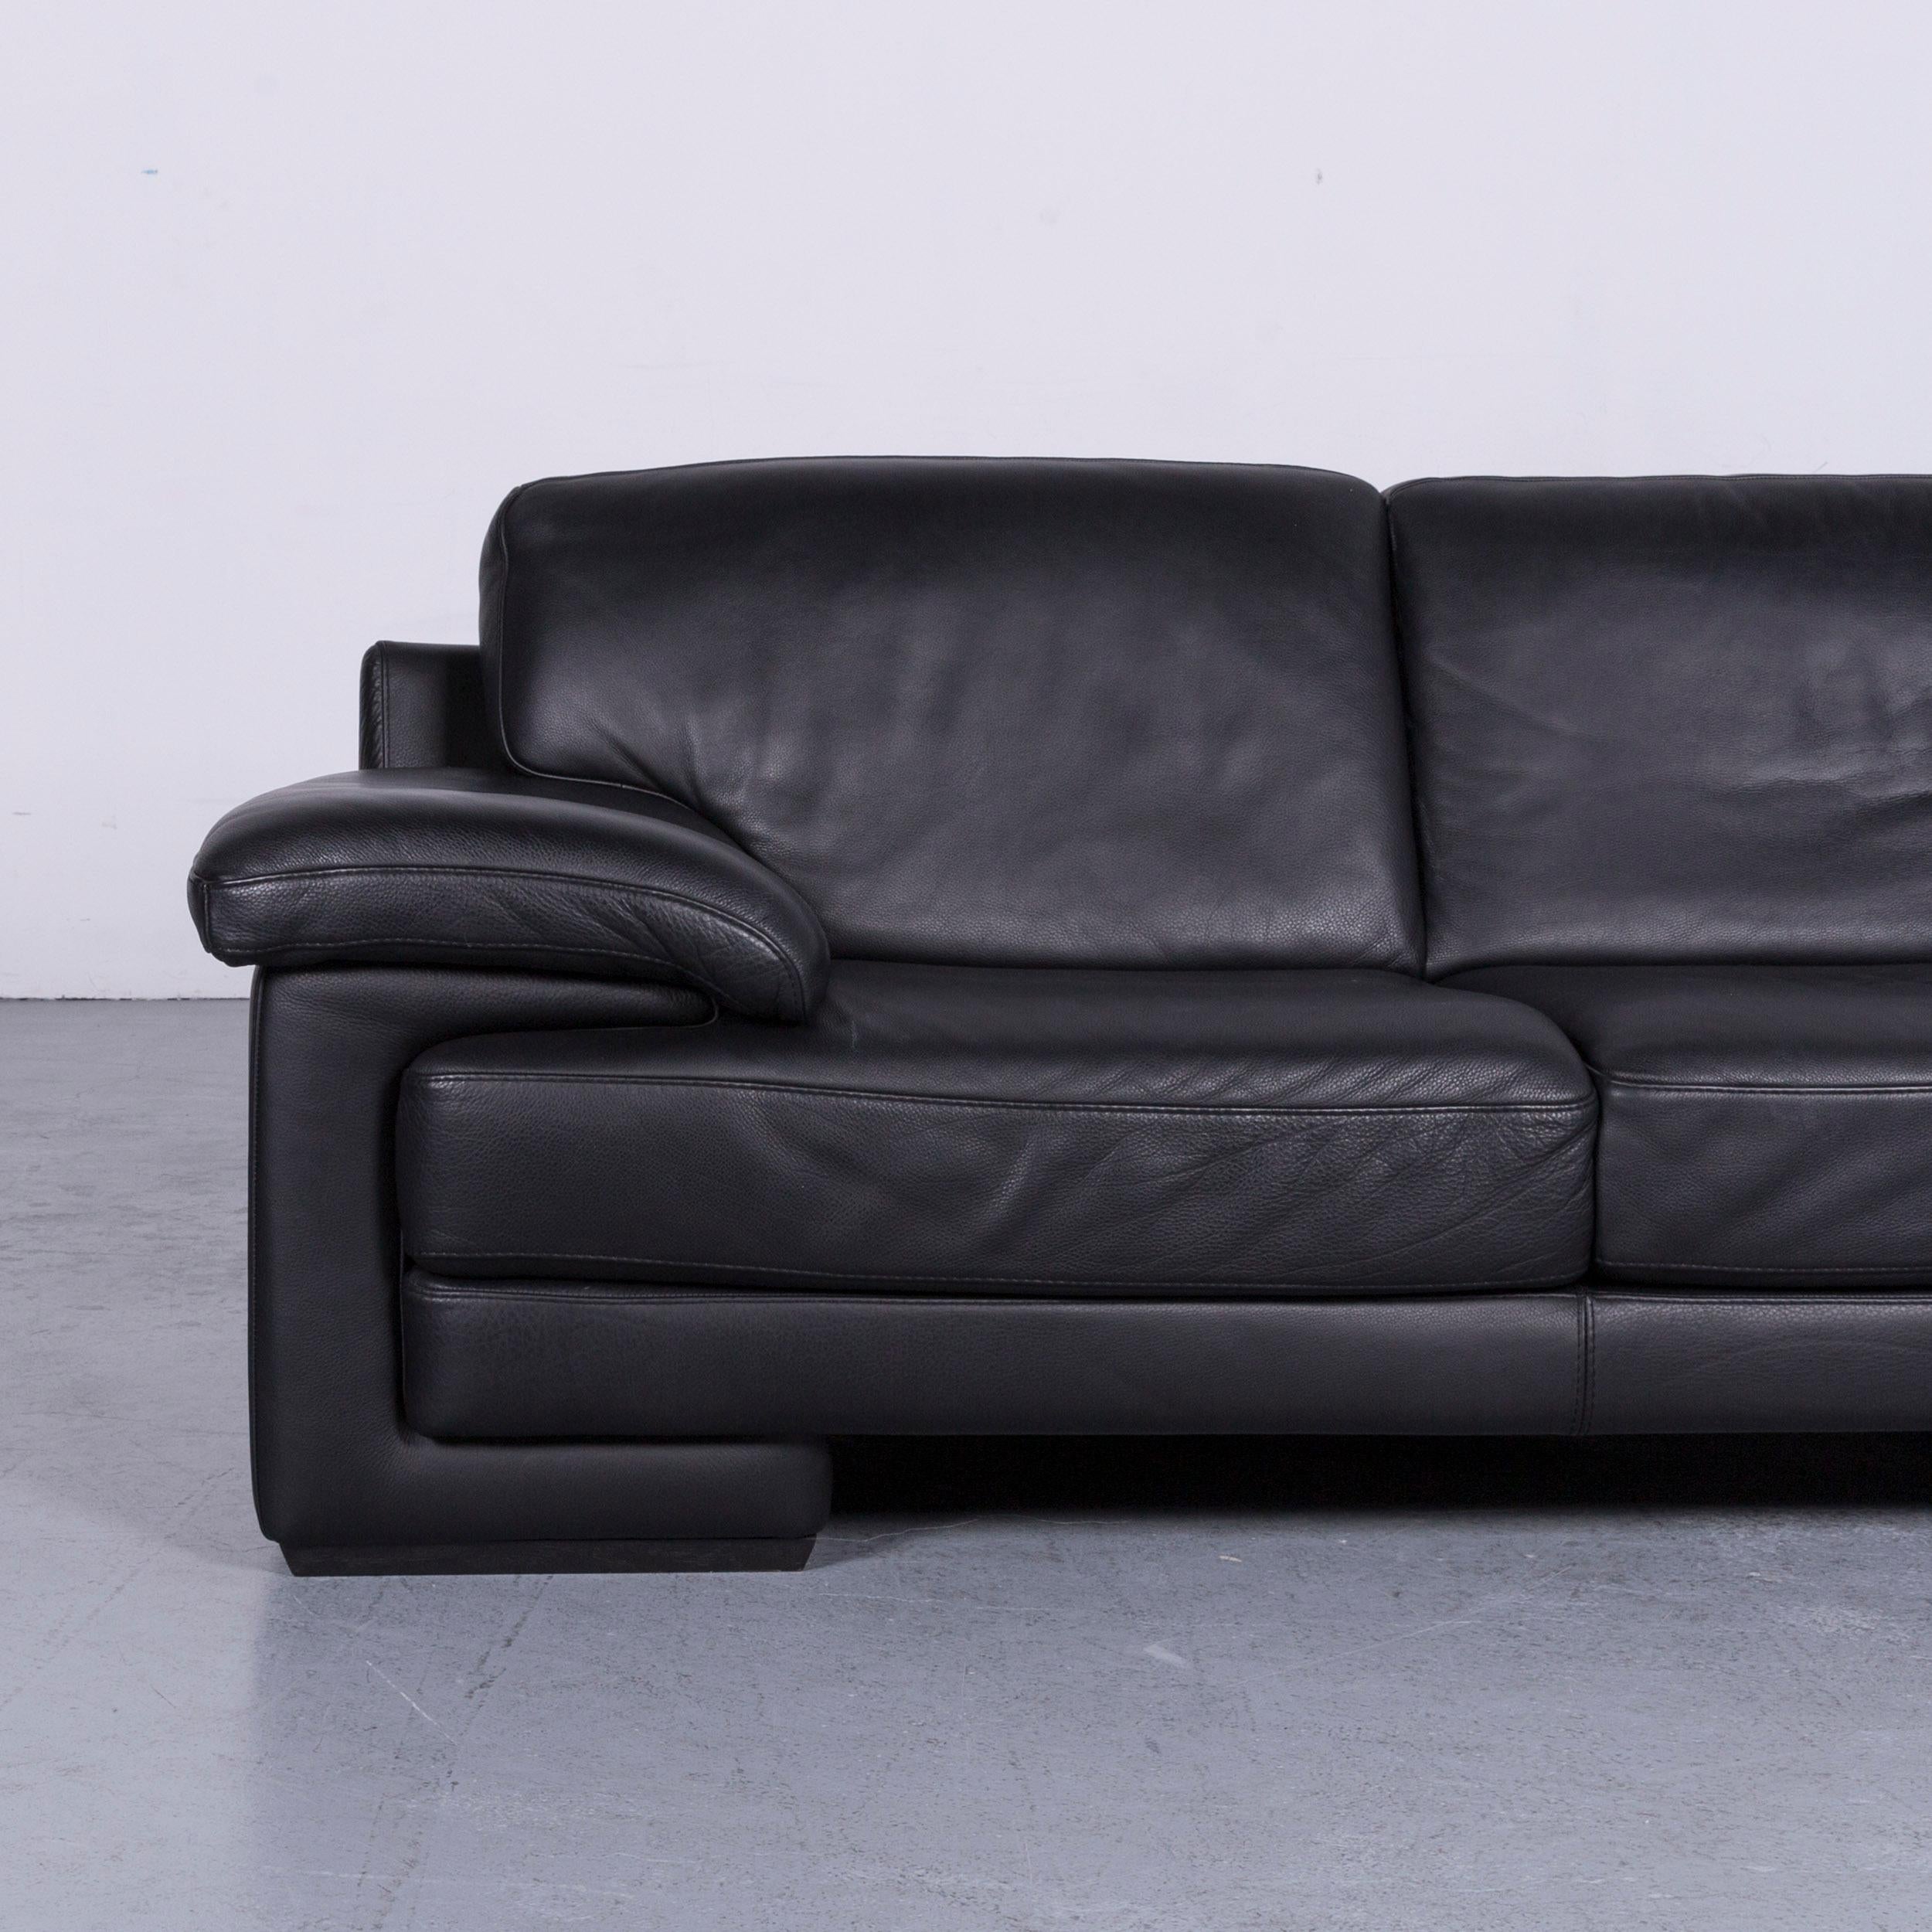 European Natuzzi Designer Leather Three-Seat Sofa Couch in Black